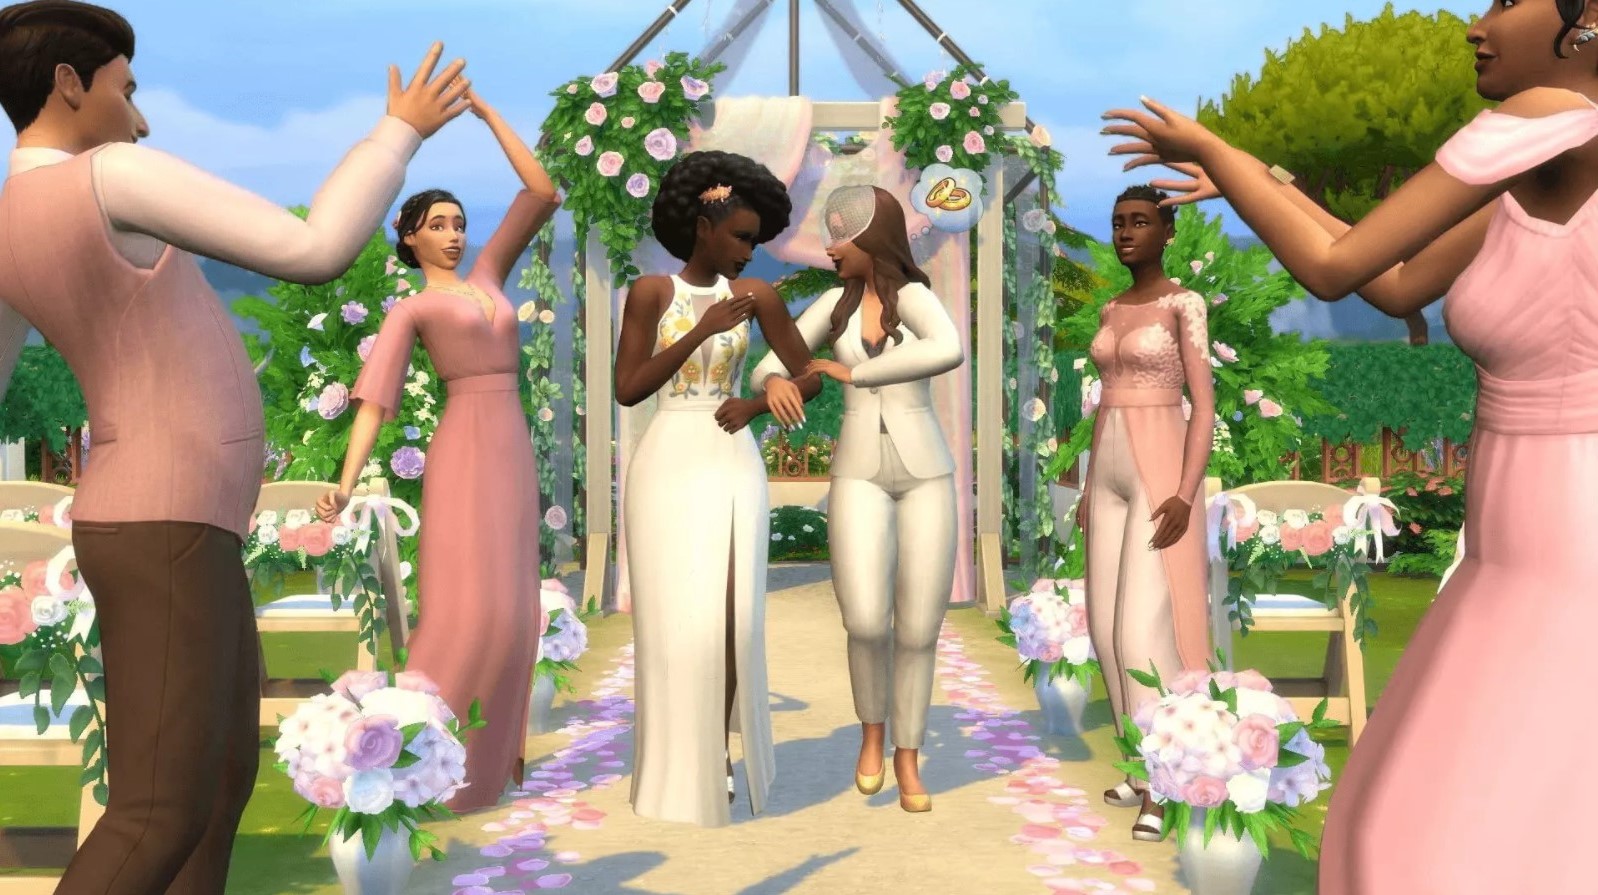 Скриншот видео © YouTube / The Sims